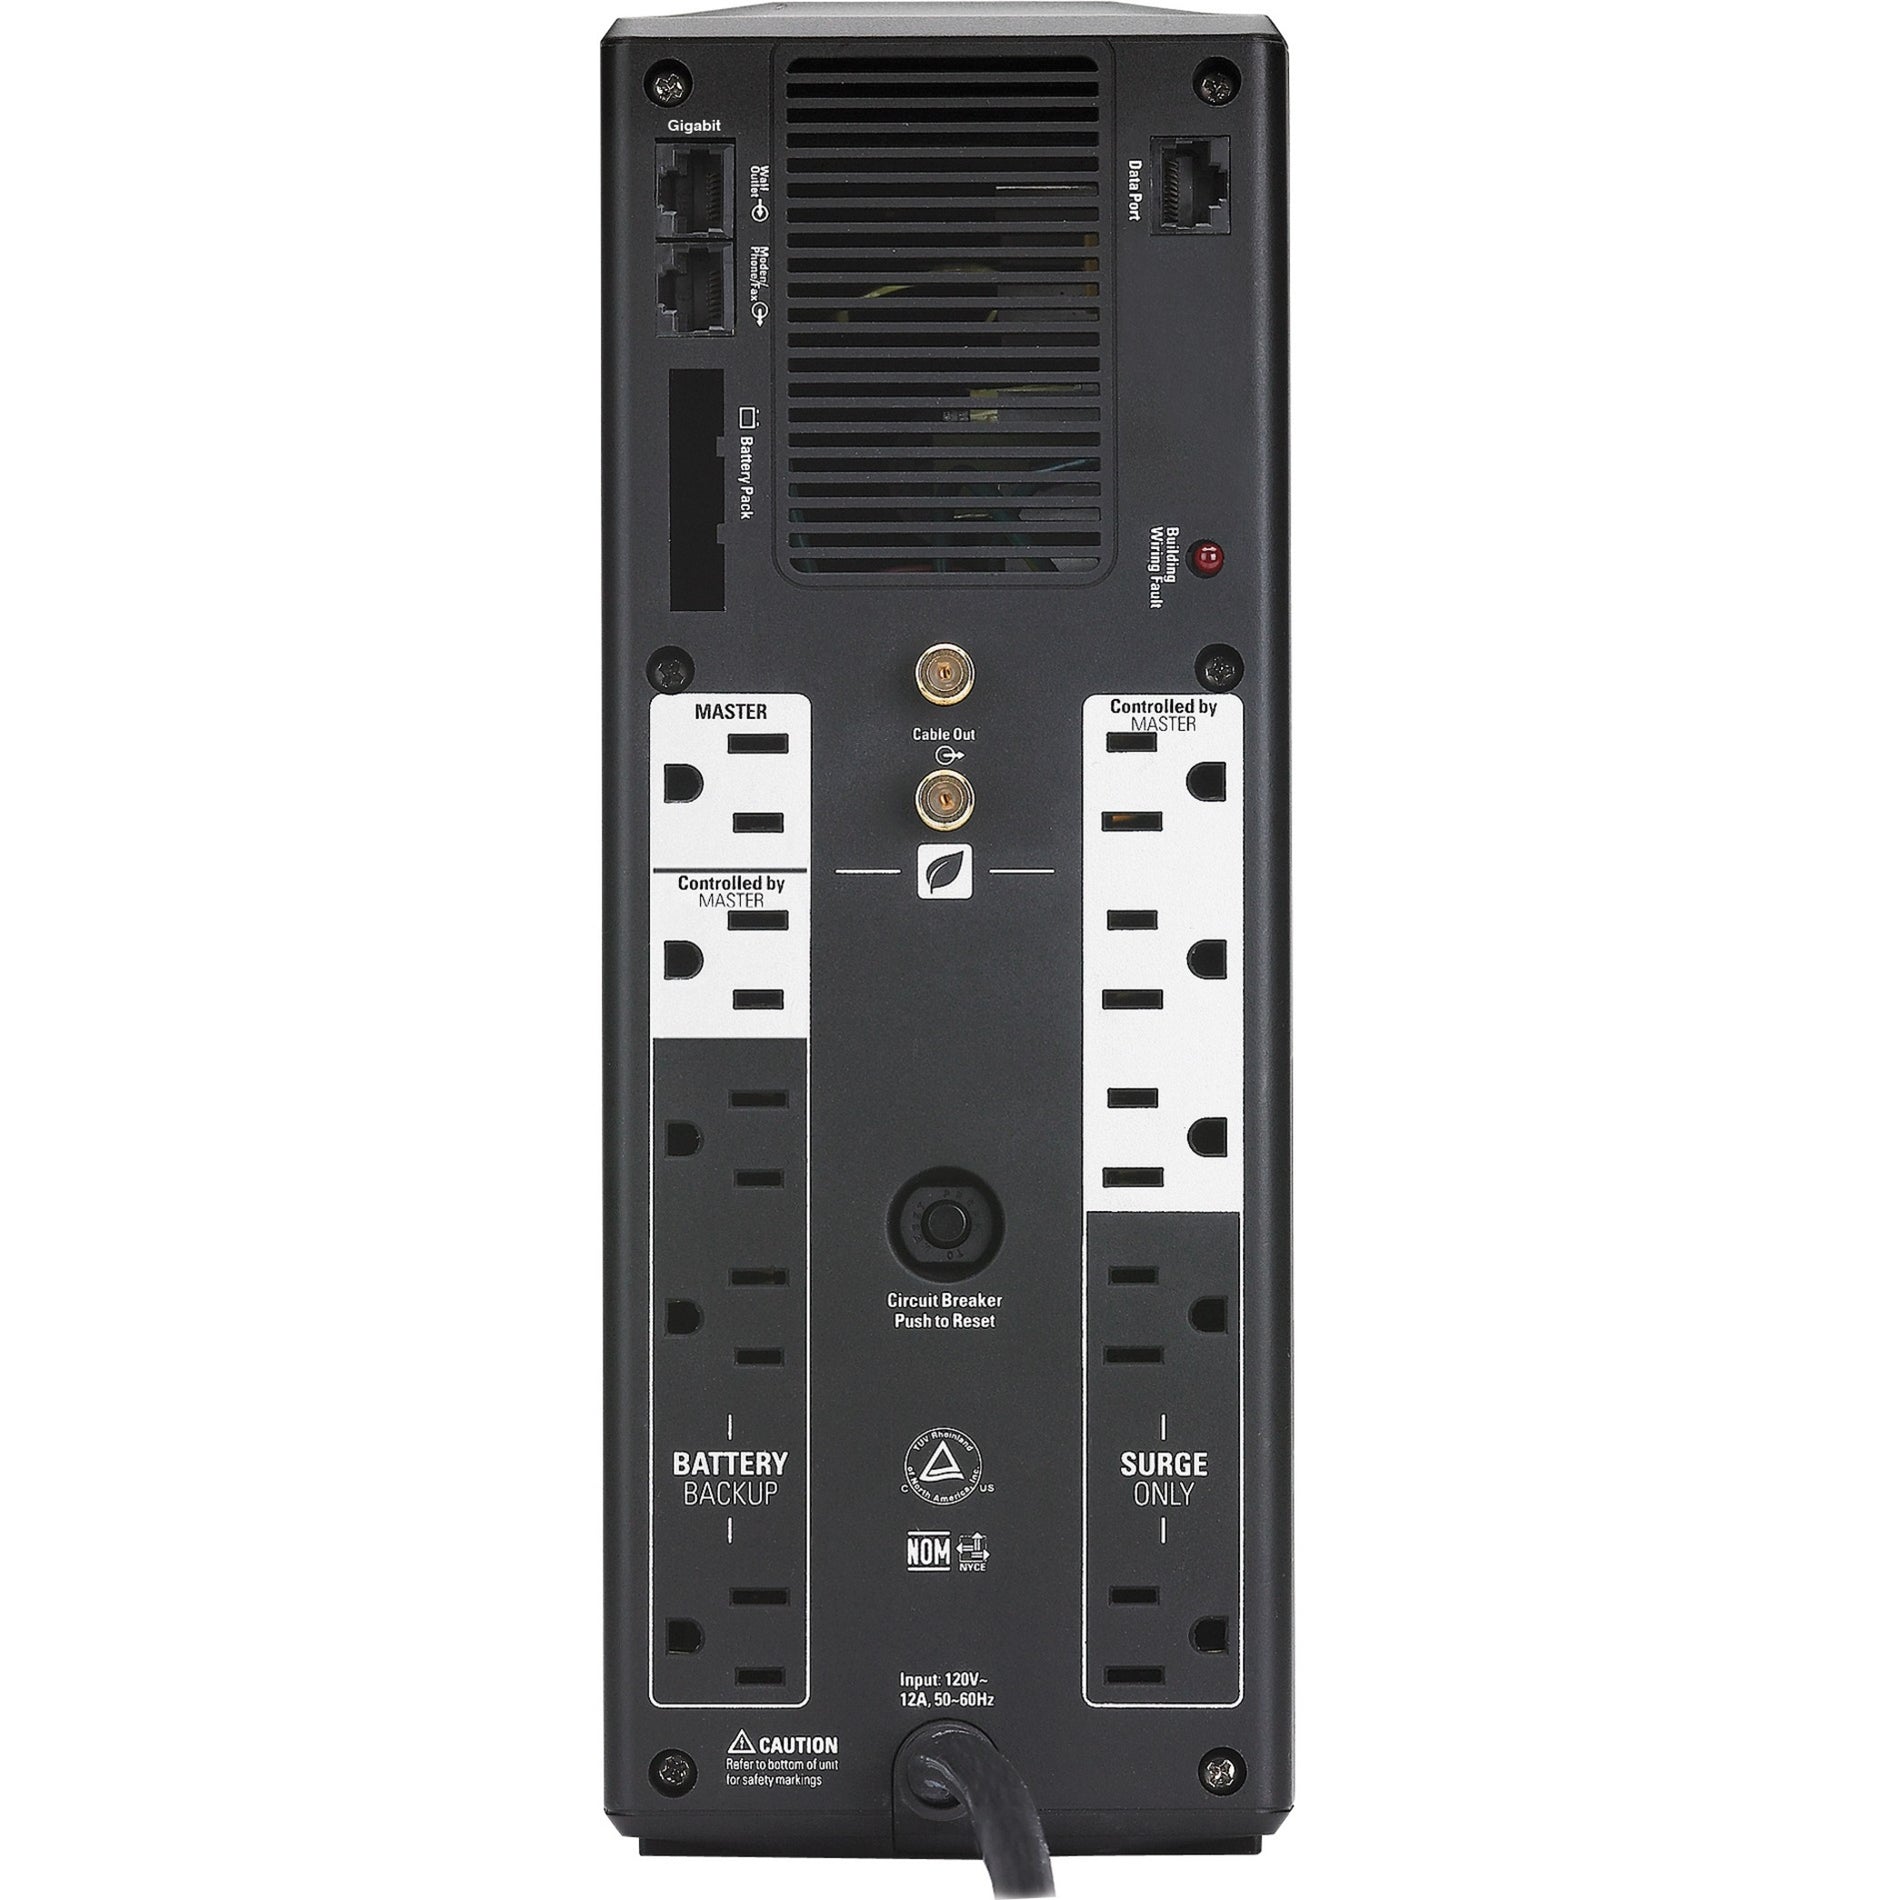 APC BR1500G Back-UPS Pro 1500, 1500 VA/865 W, 3 Year Warranty, Energy Star